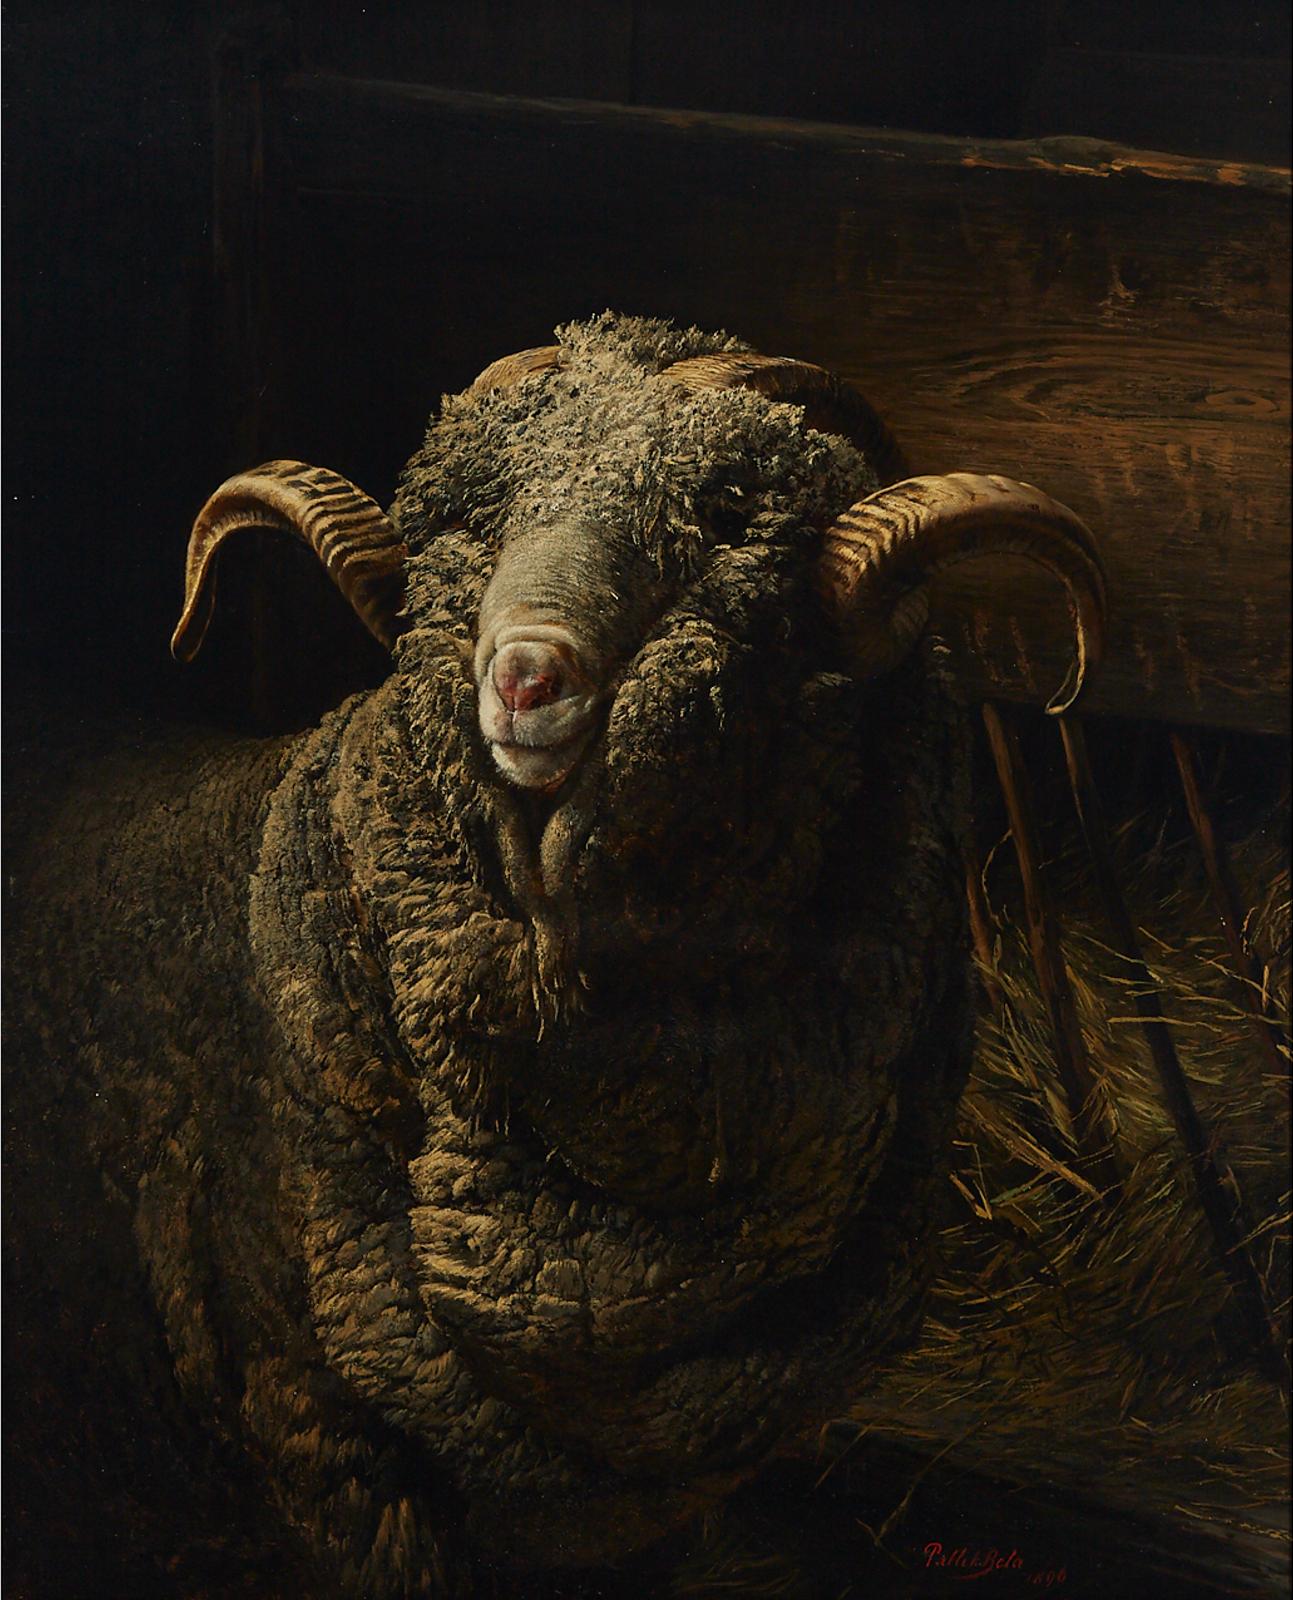 Béla Pállik (1845-1908) - The Head Of A Ram, 1897